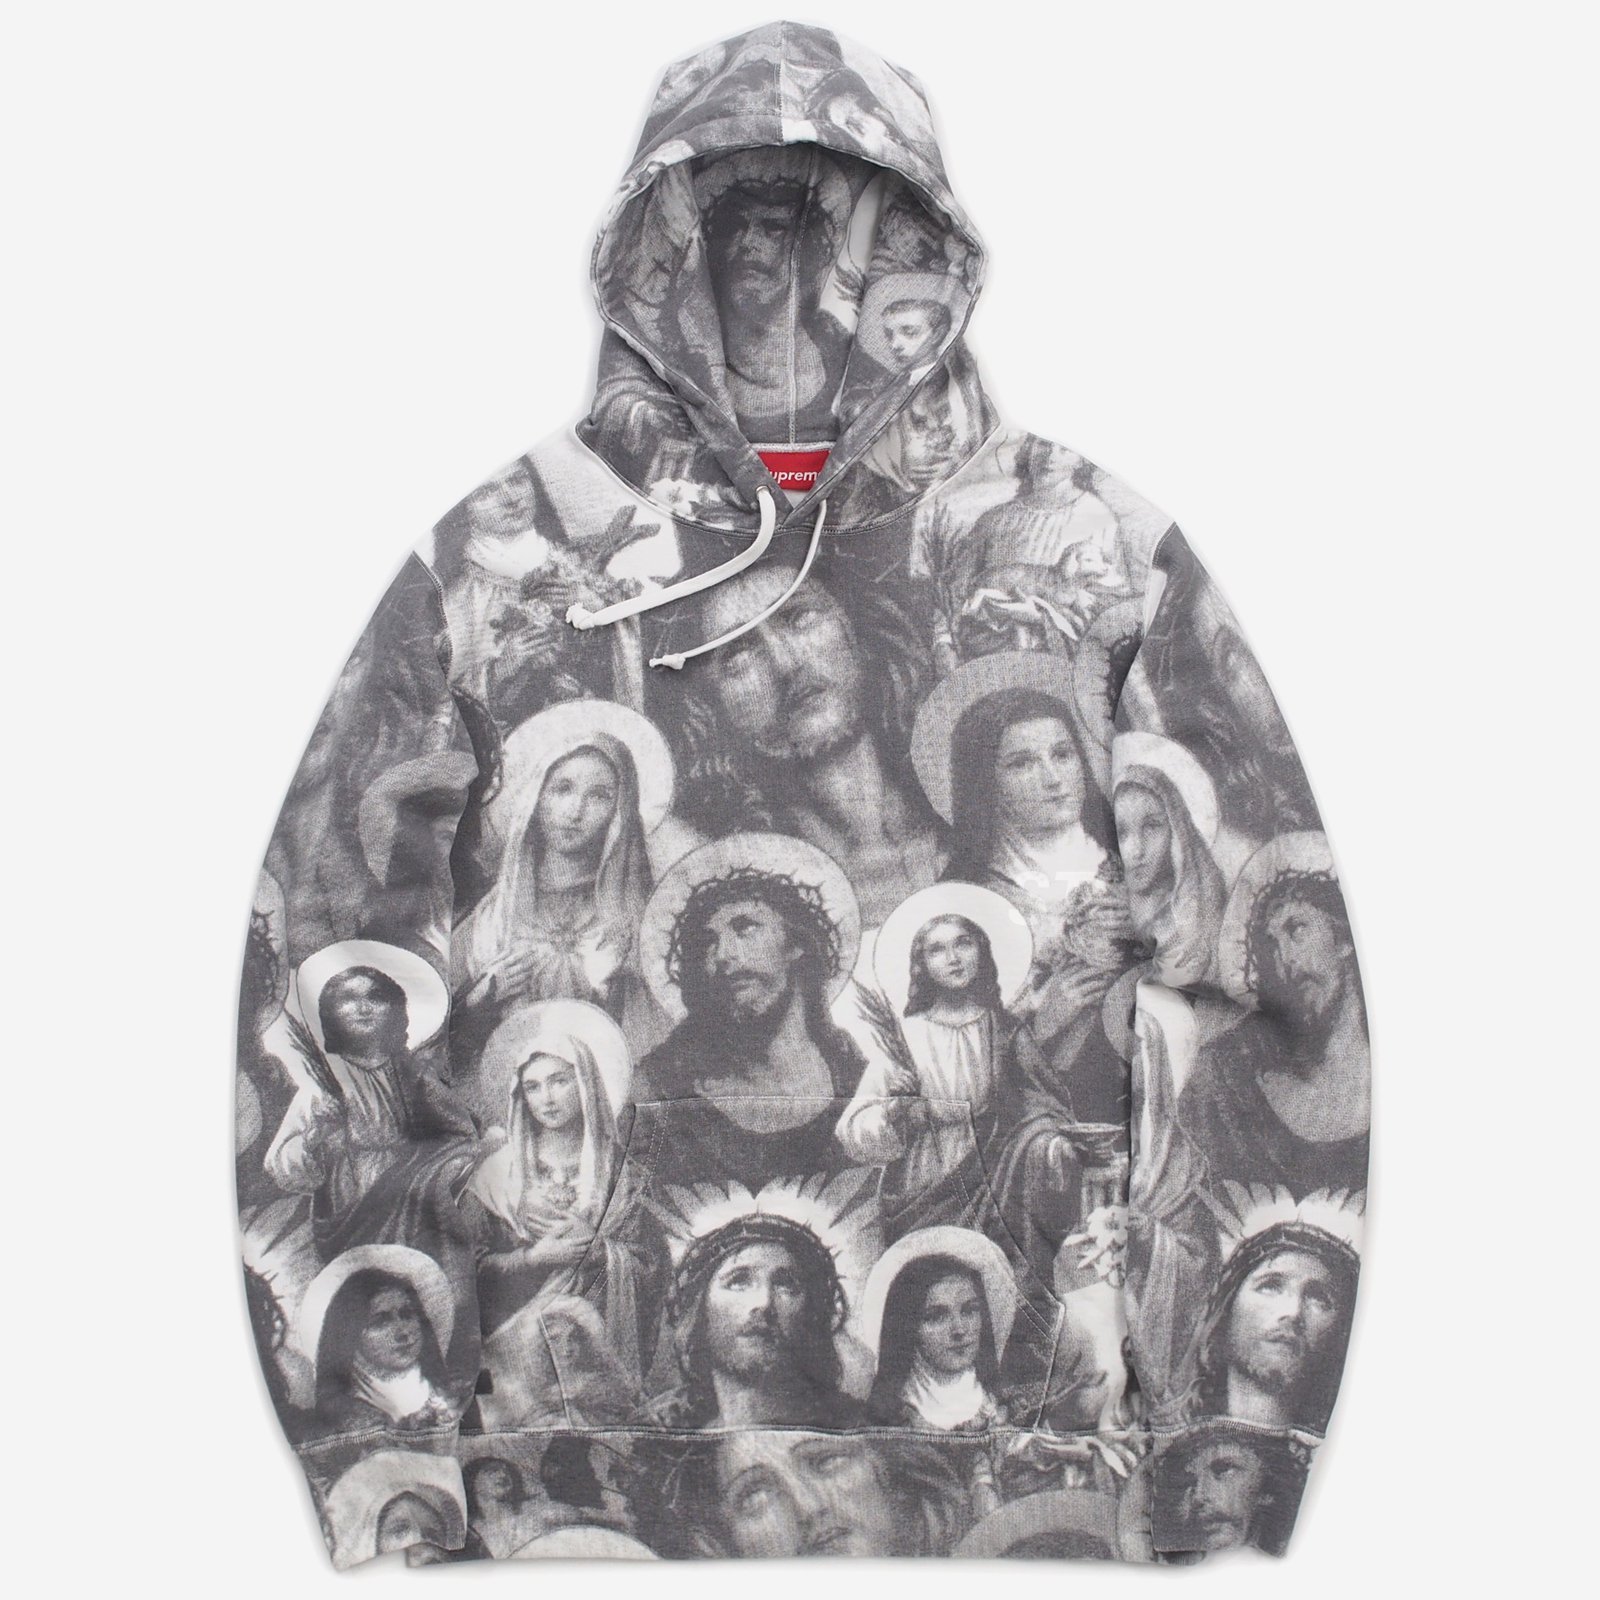 Jesus and Mary Hooded Sweatshirt M - パーカー